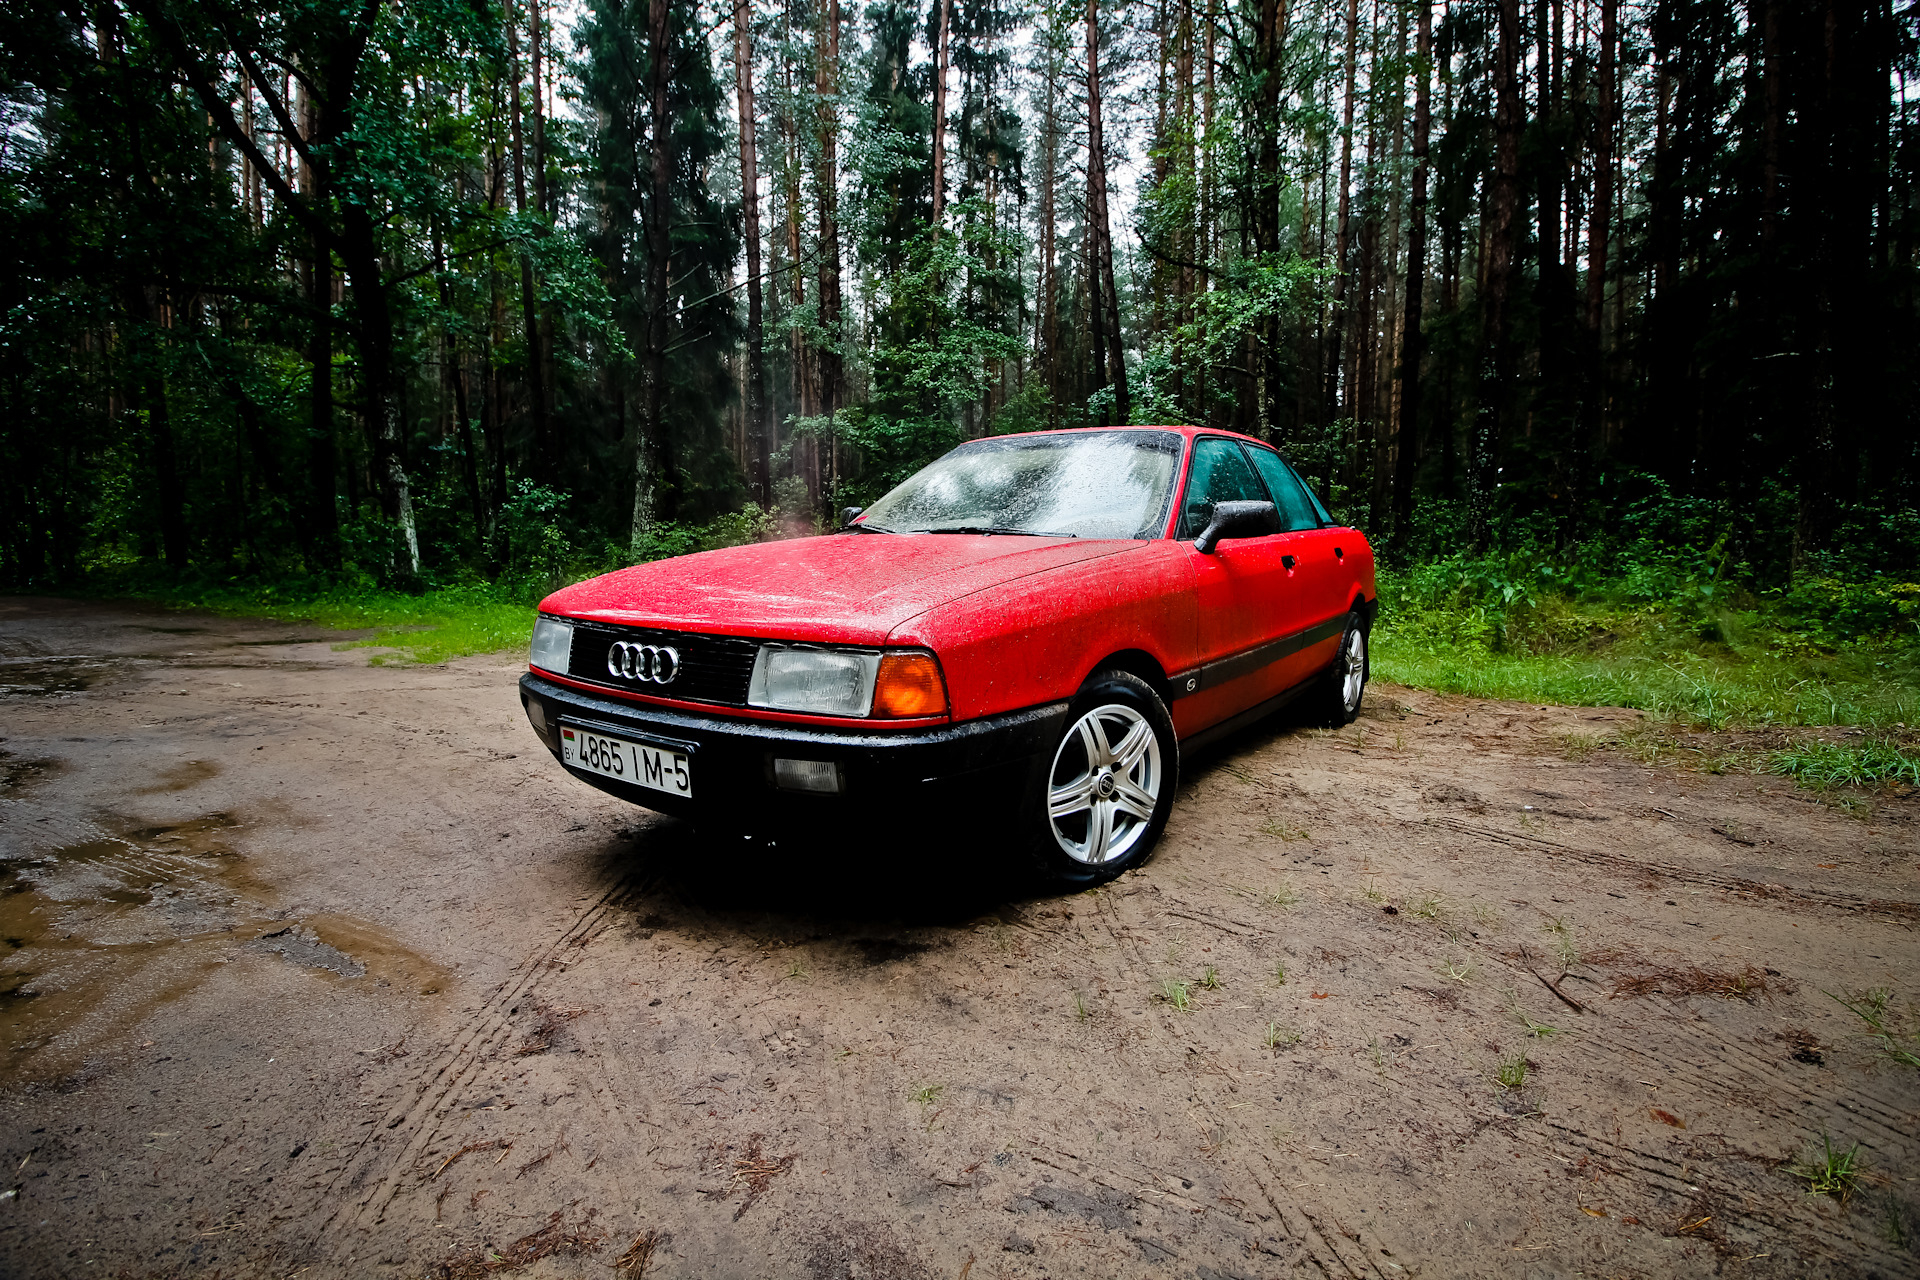 Купить ауди б4 в белоруссии. Audi 80 b3. Audi 80 б3. Ауди 80 в3. Ауди 80 б3 1.8.